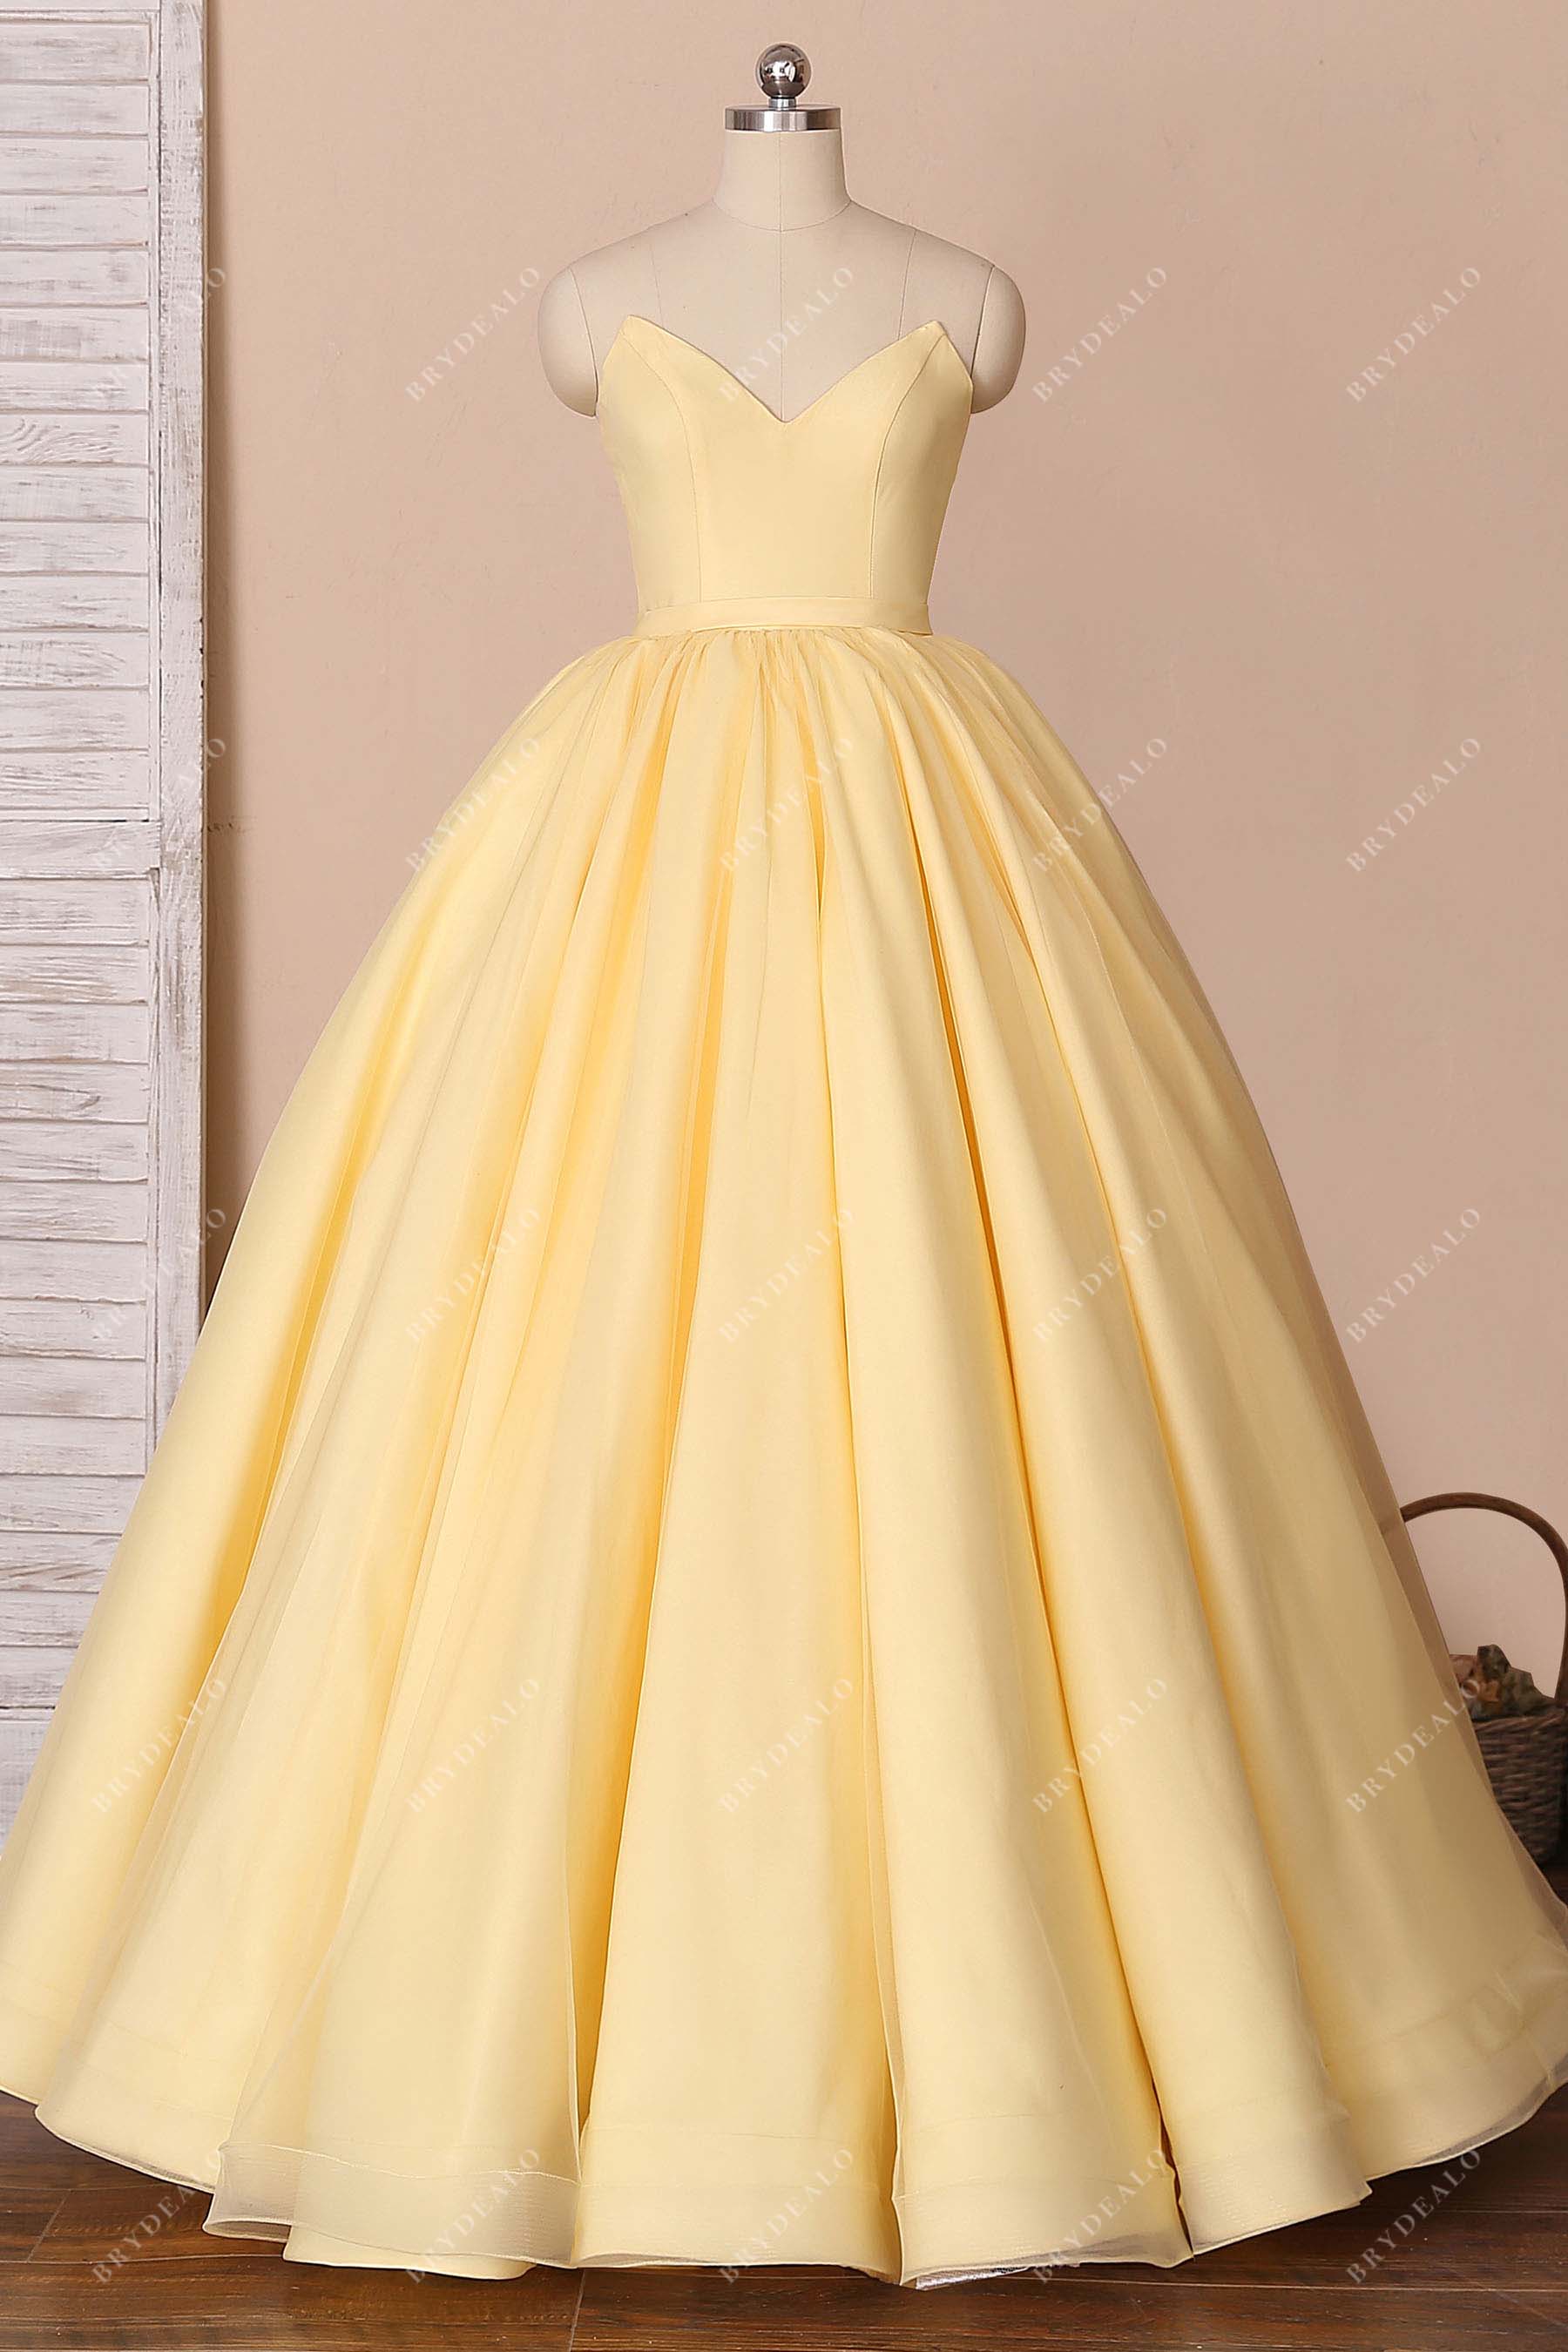 daffodil yellow corset ball gown dress